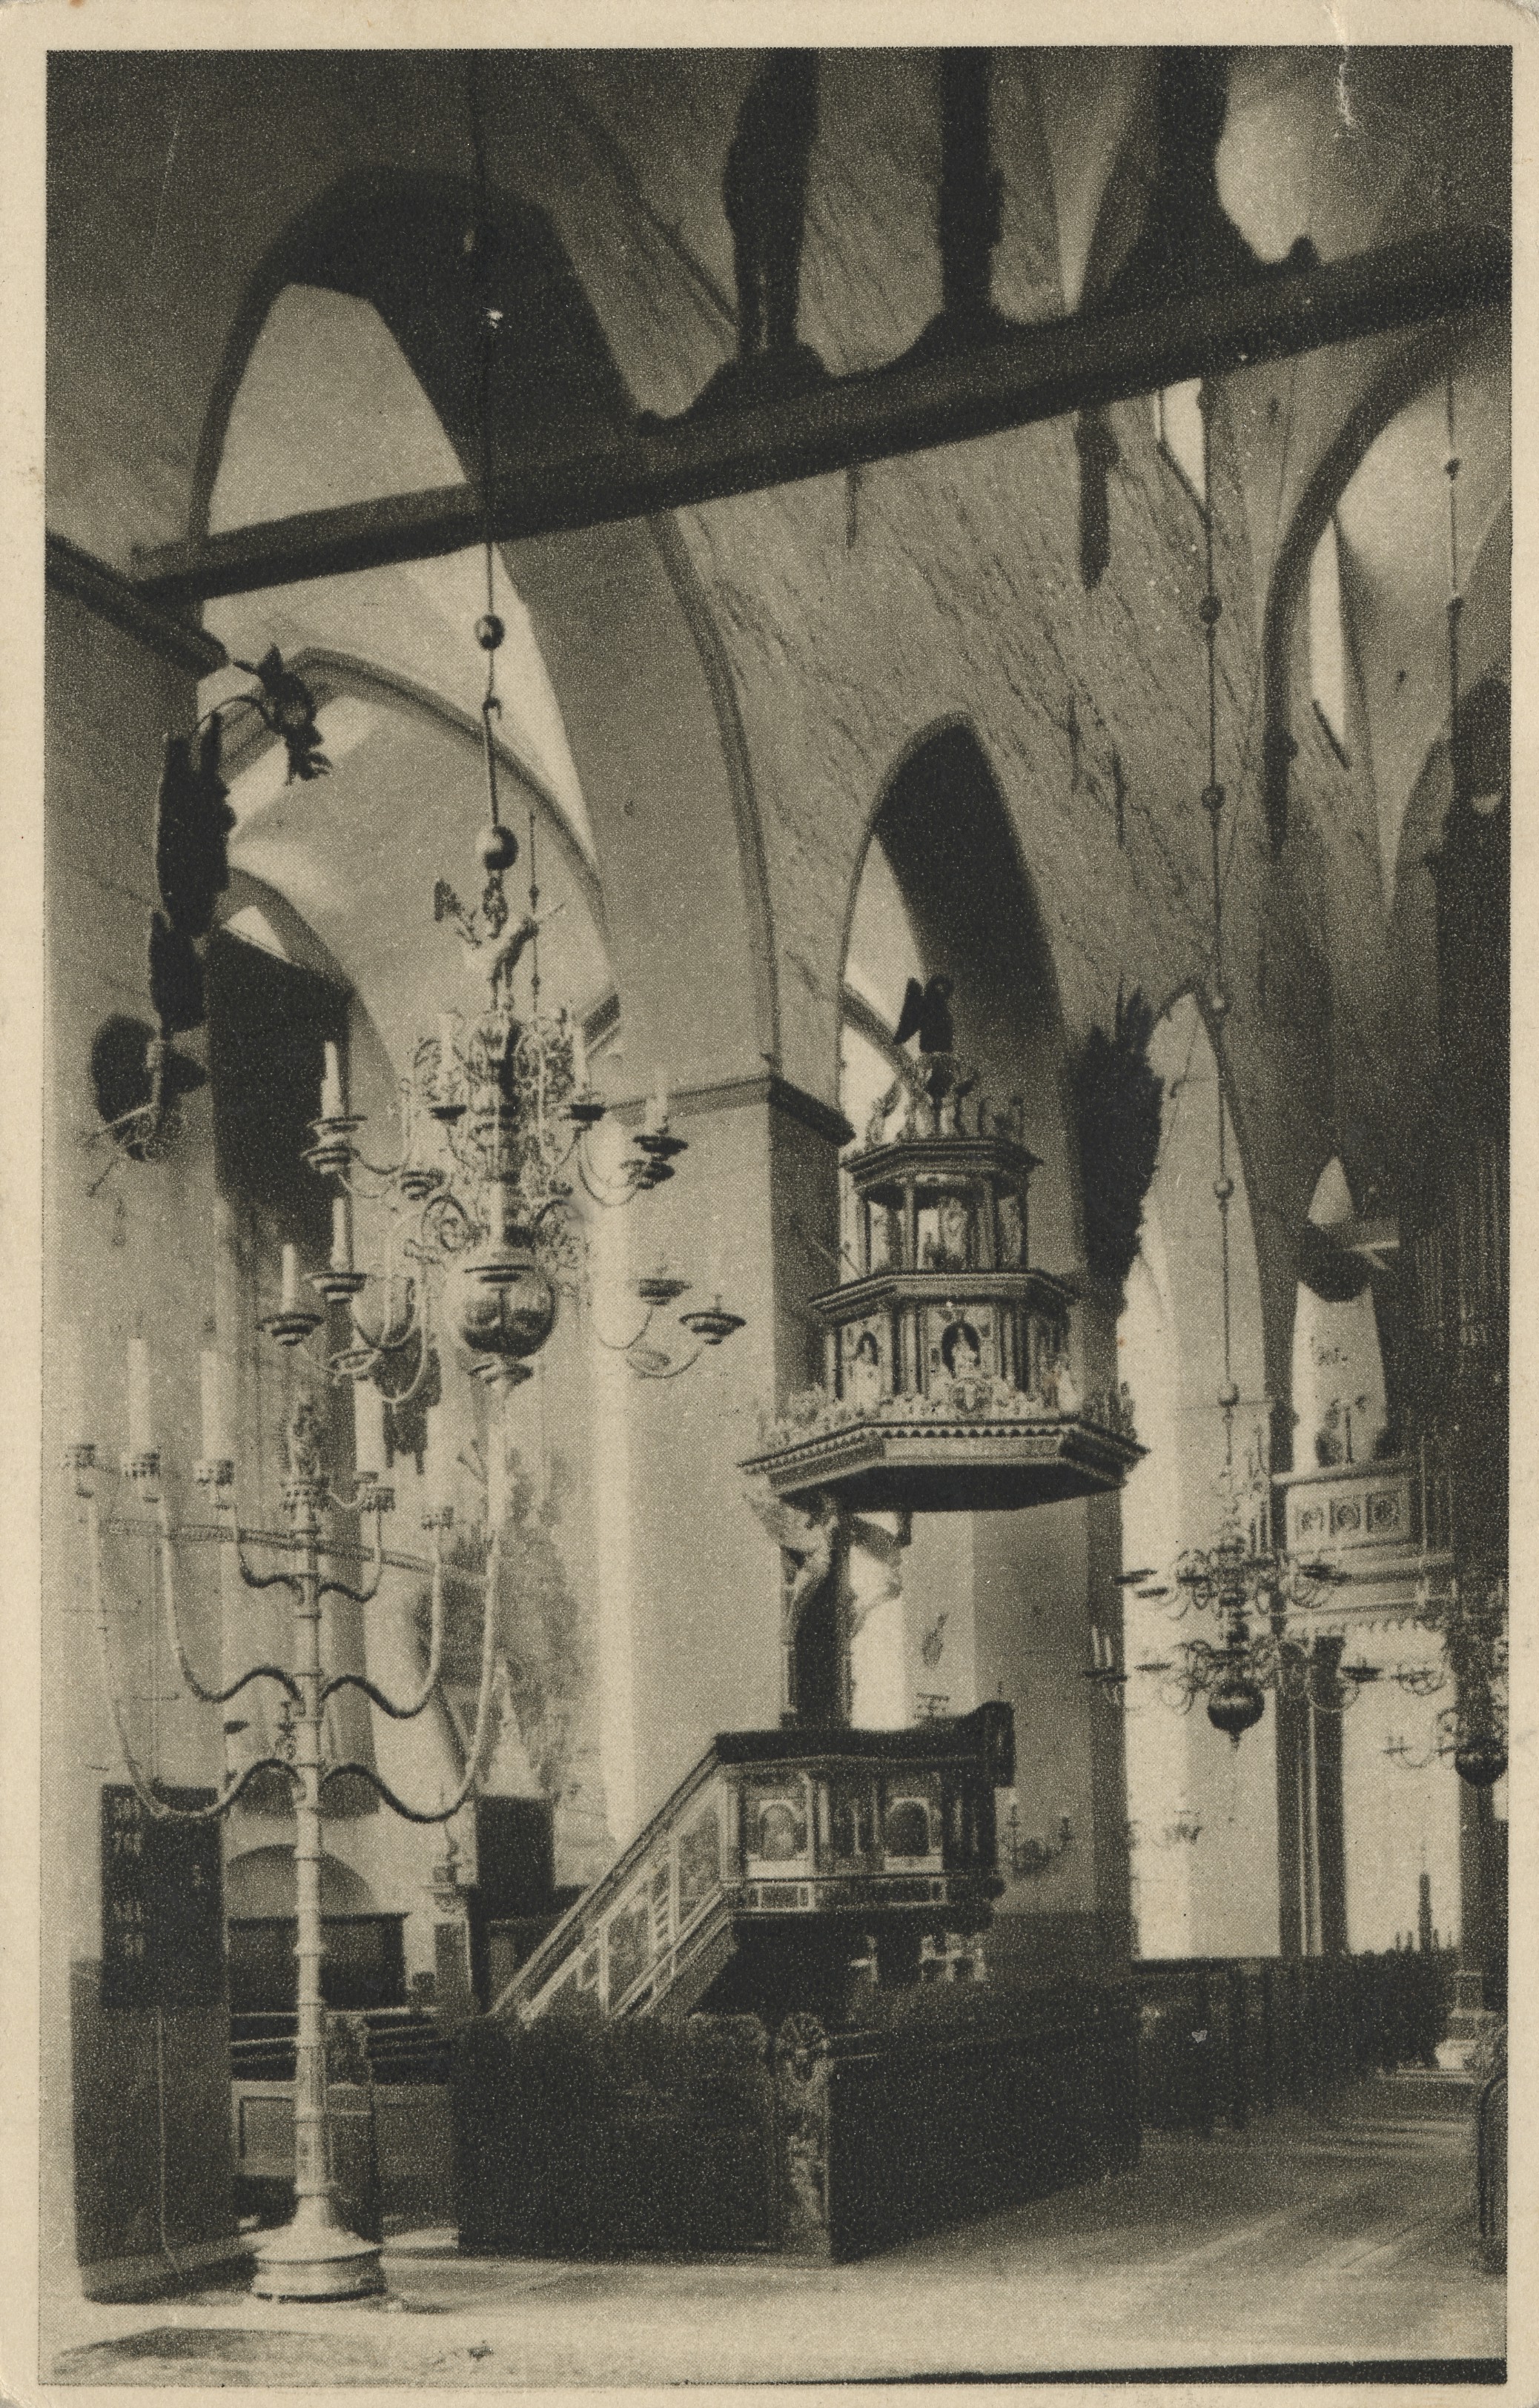 The cancellation of the Niguliste Church of Tallinn